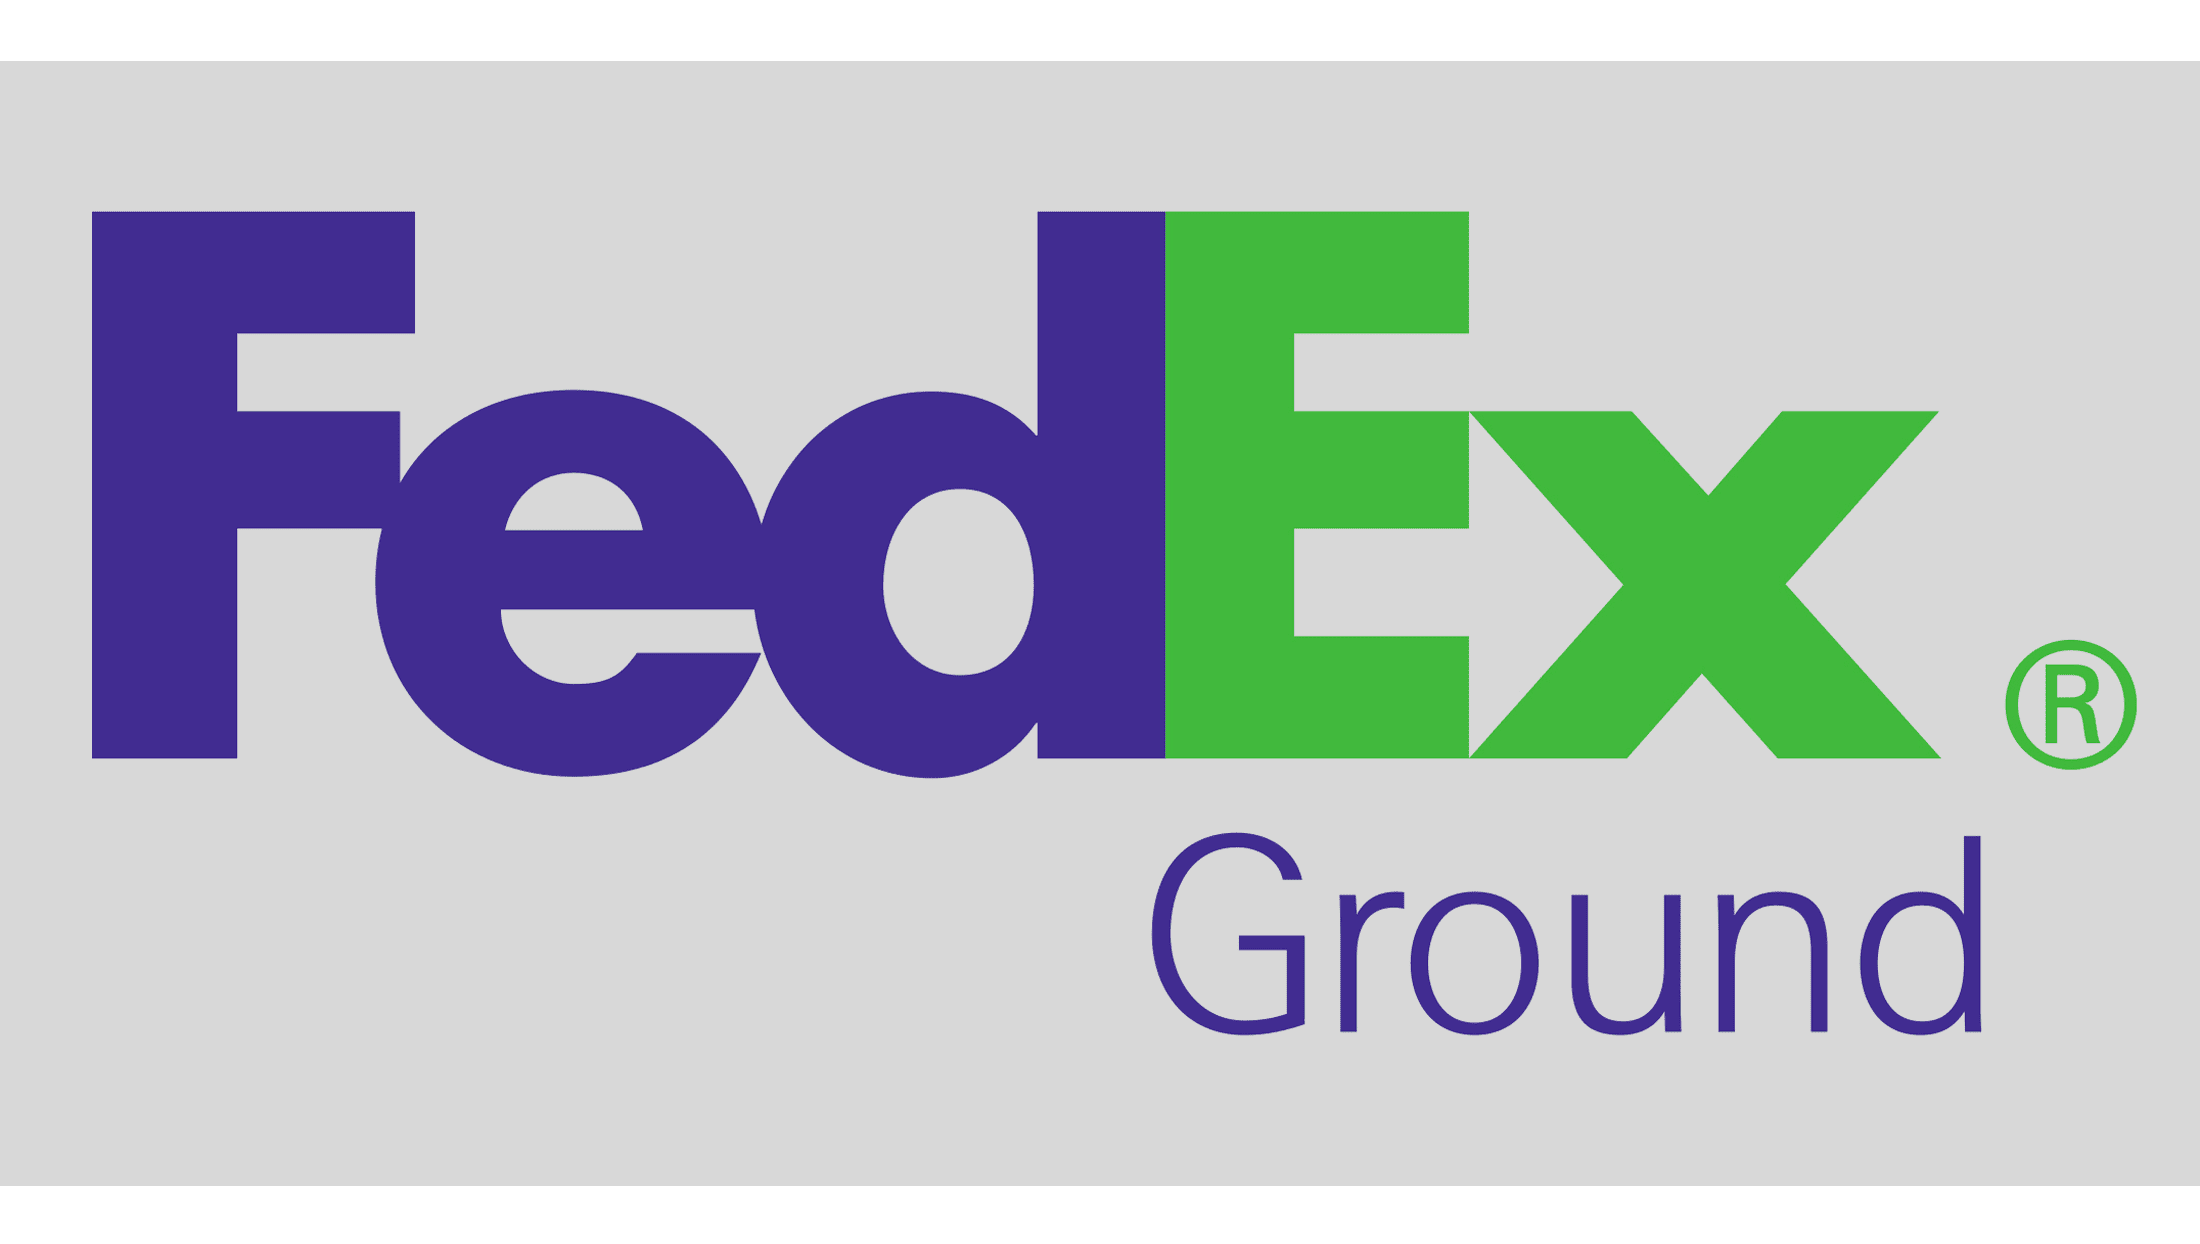 fedex ground logo symbol png brand #42682